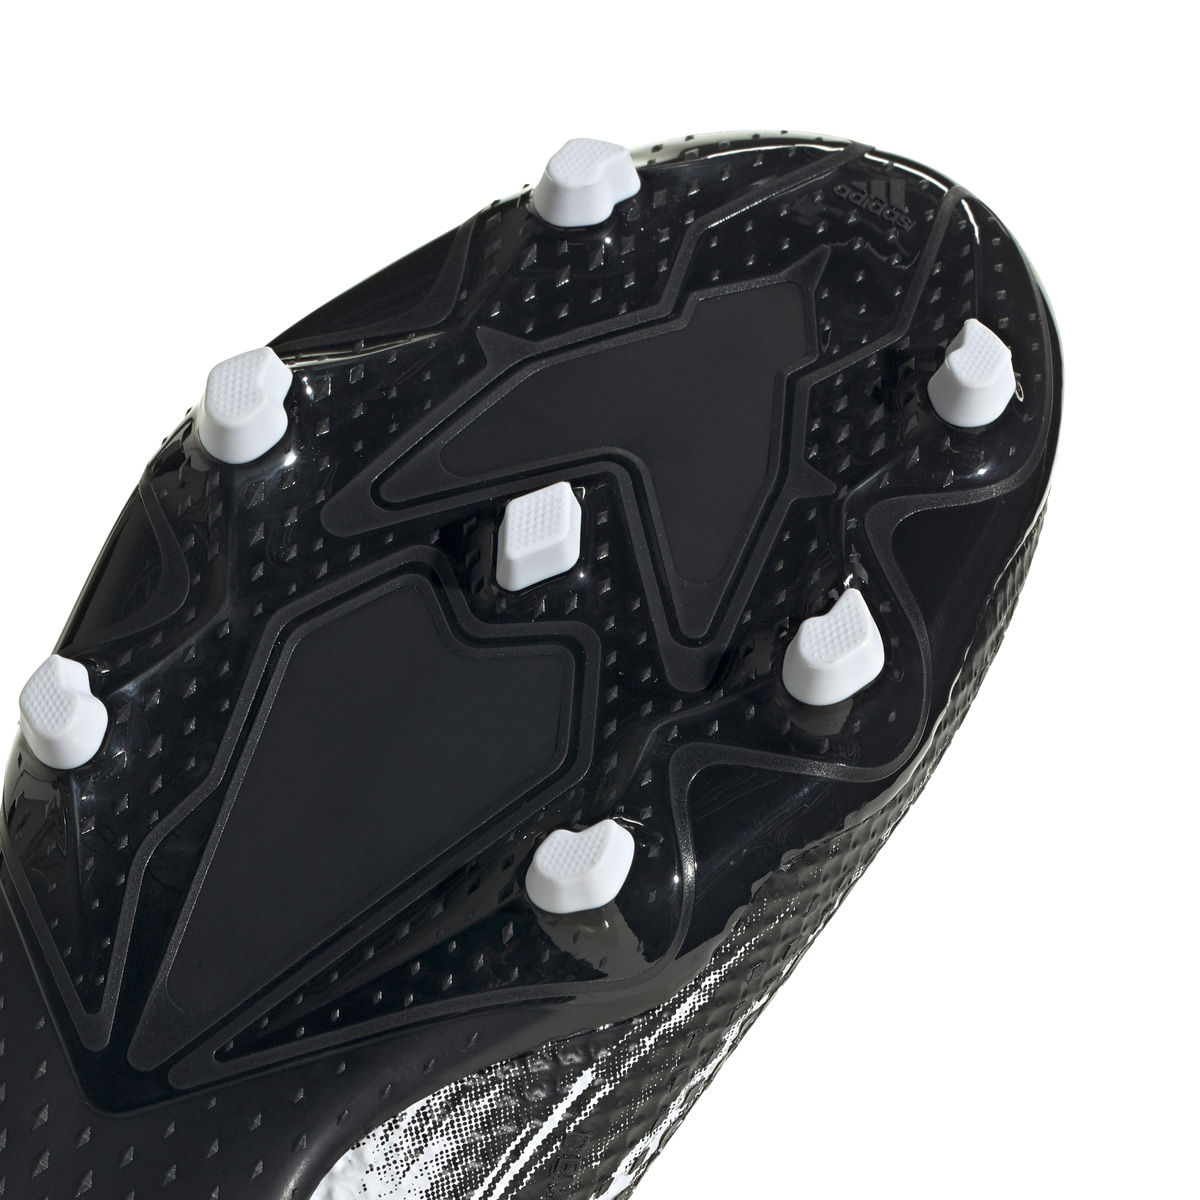 adidas Predator 20.3 FG Soccer Shoes (White/Black/Gold) @ SoccerEvolution